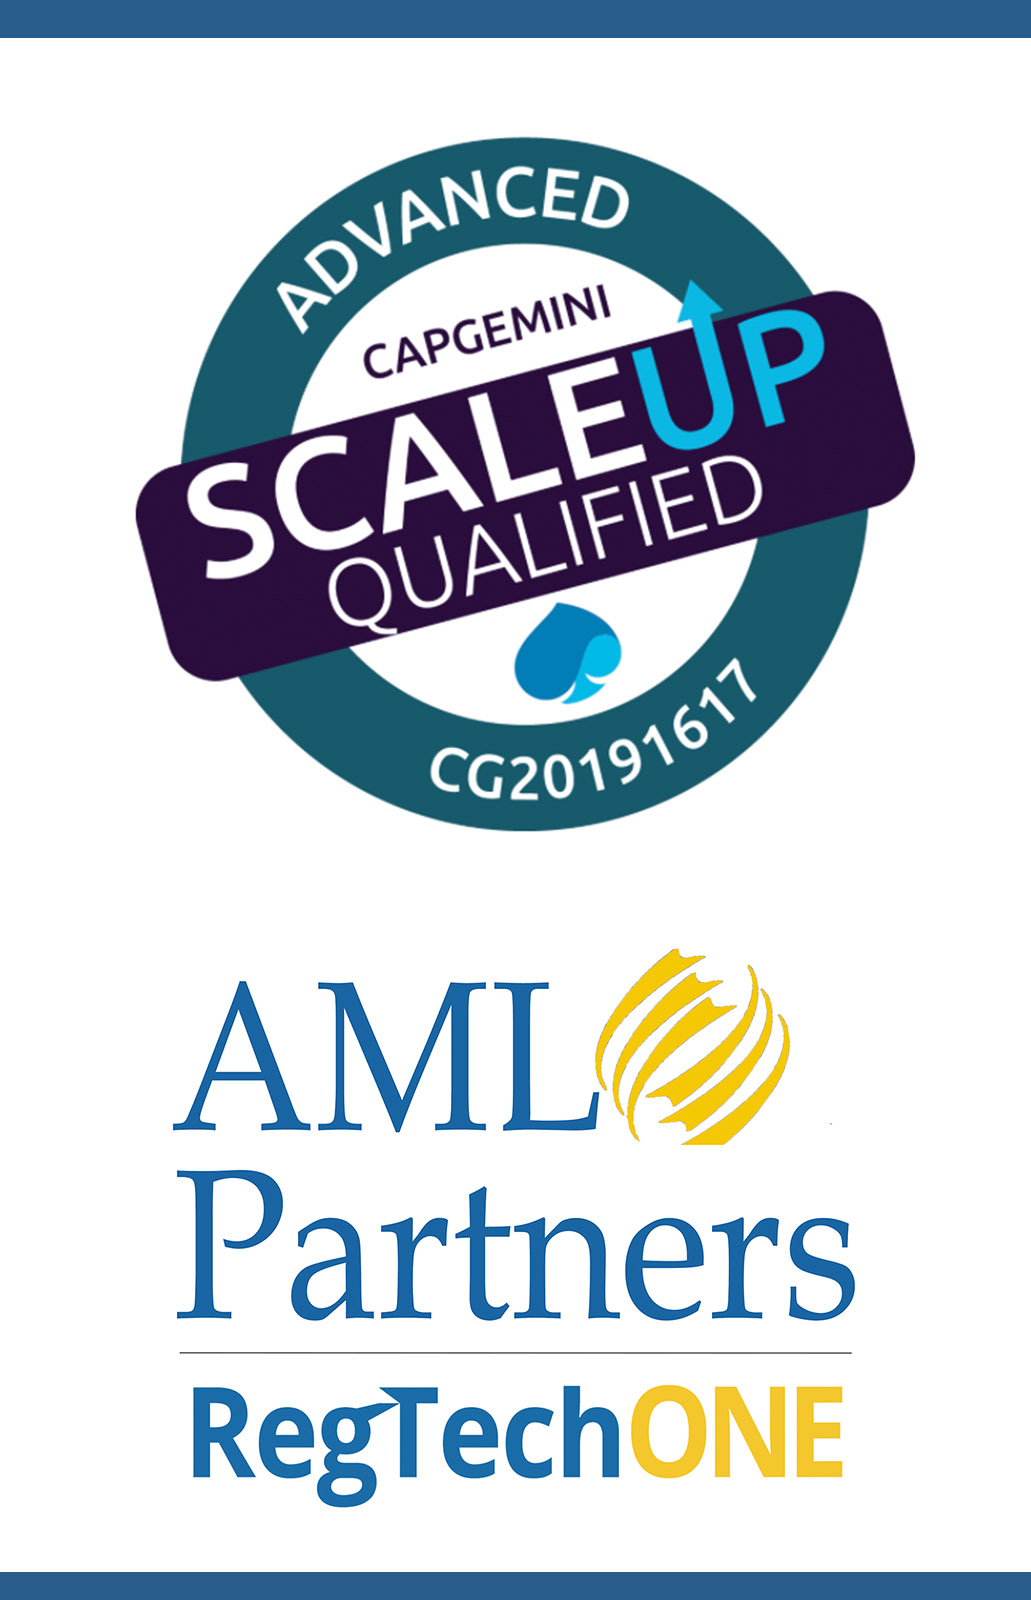 CapGemini Scaleup Qualified--AML Partners and RegTechONE. RegTechONE software platform for AML software, GRC software, AML solutions, KYC software, KYC solutions.